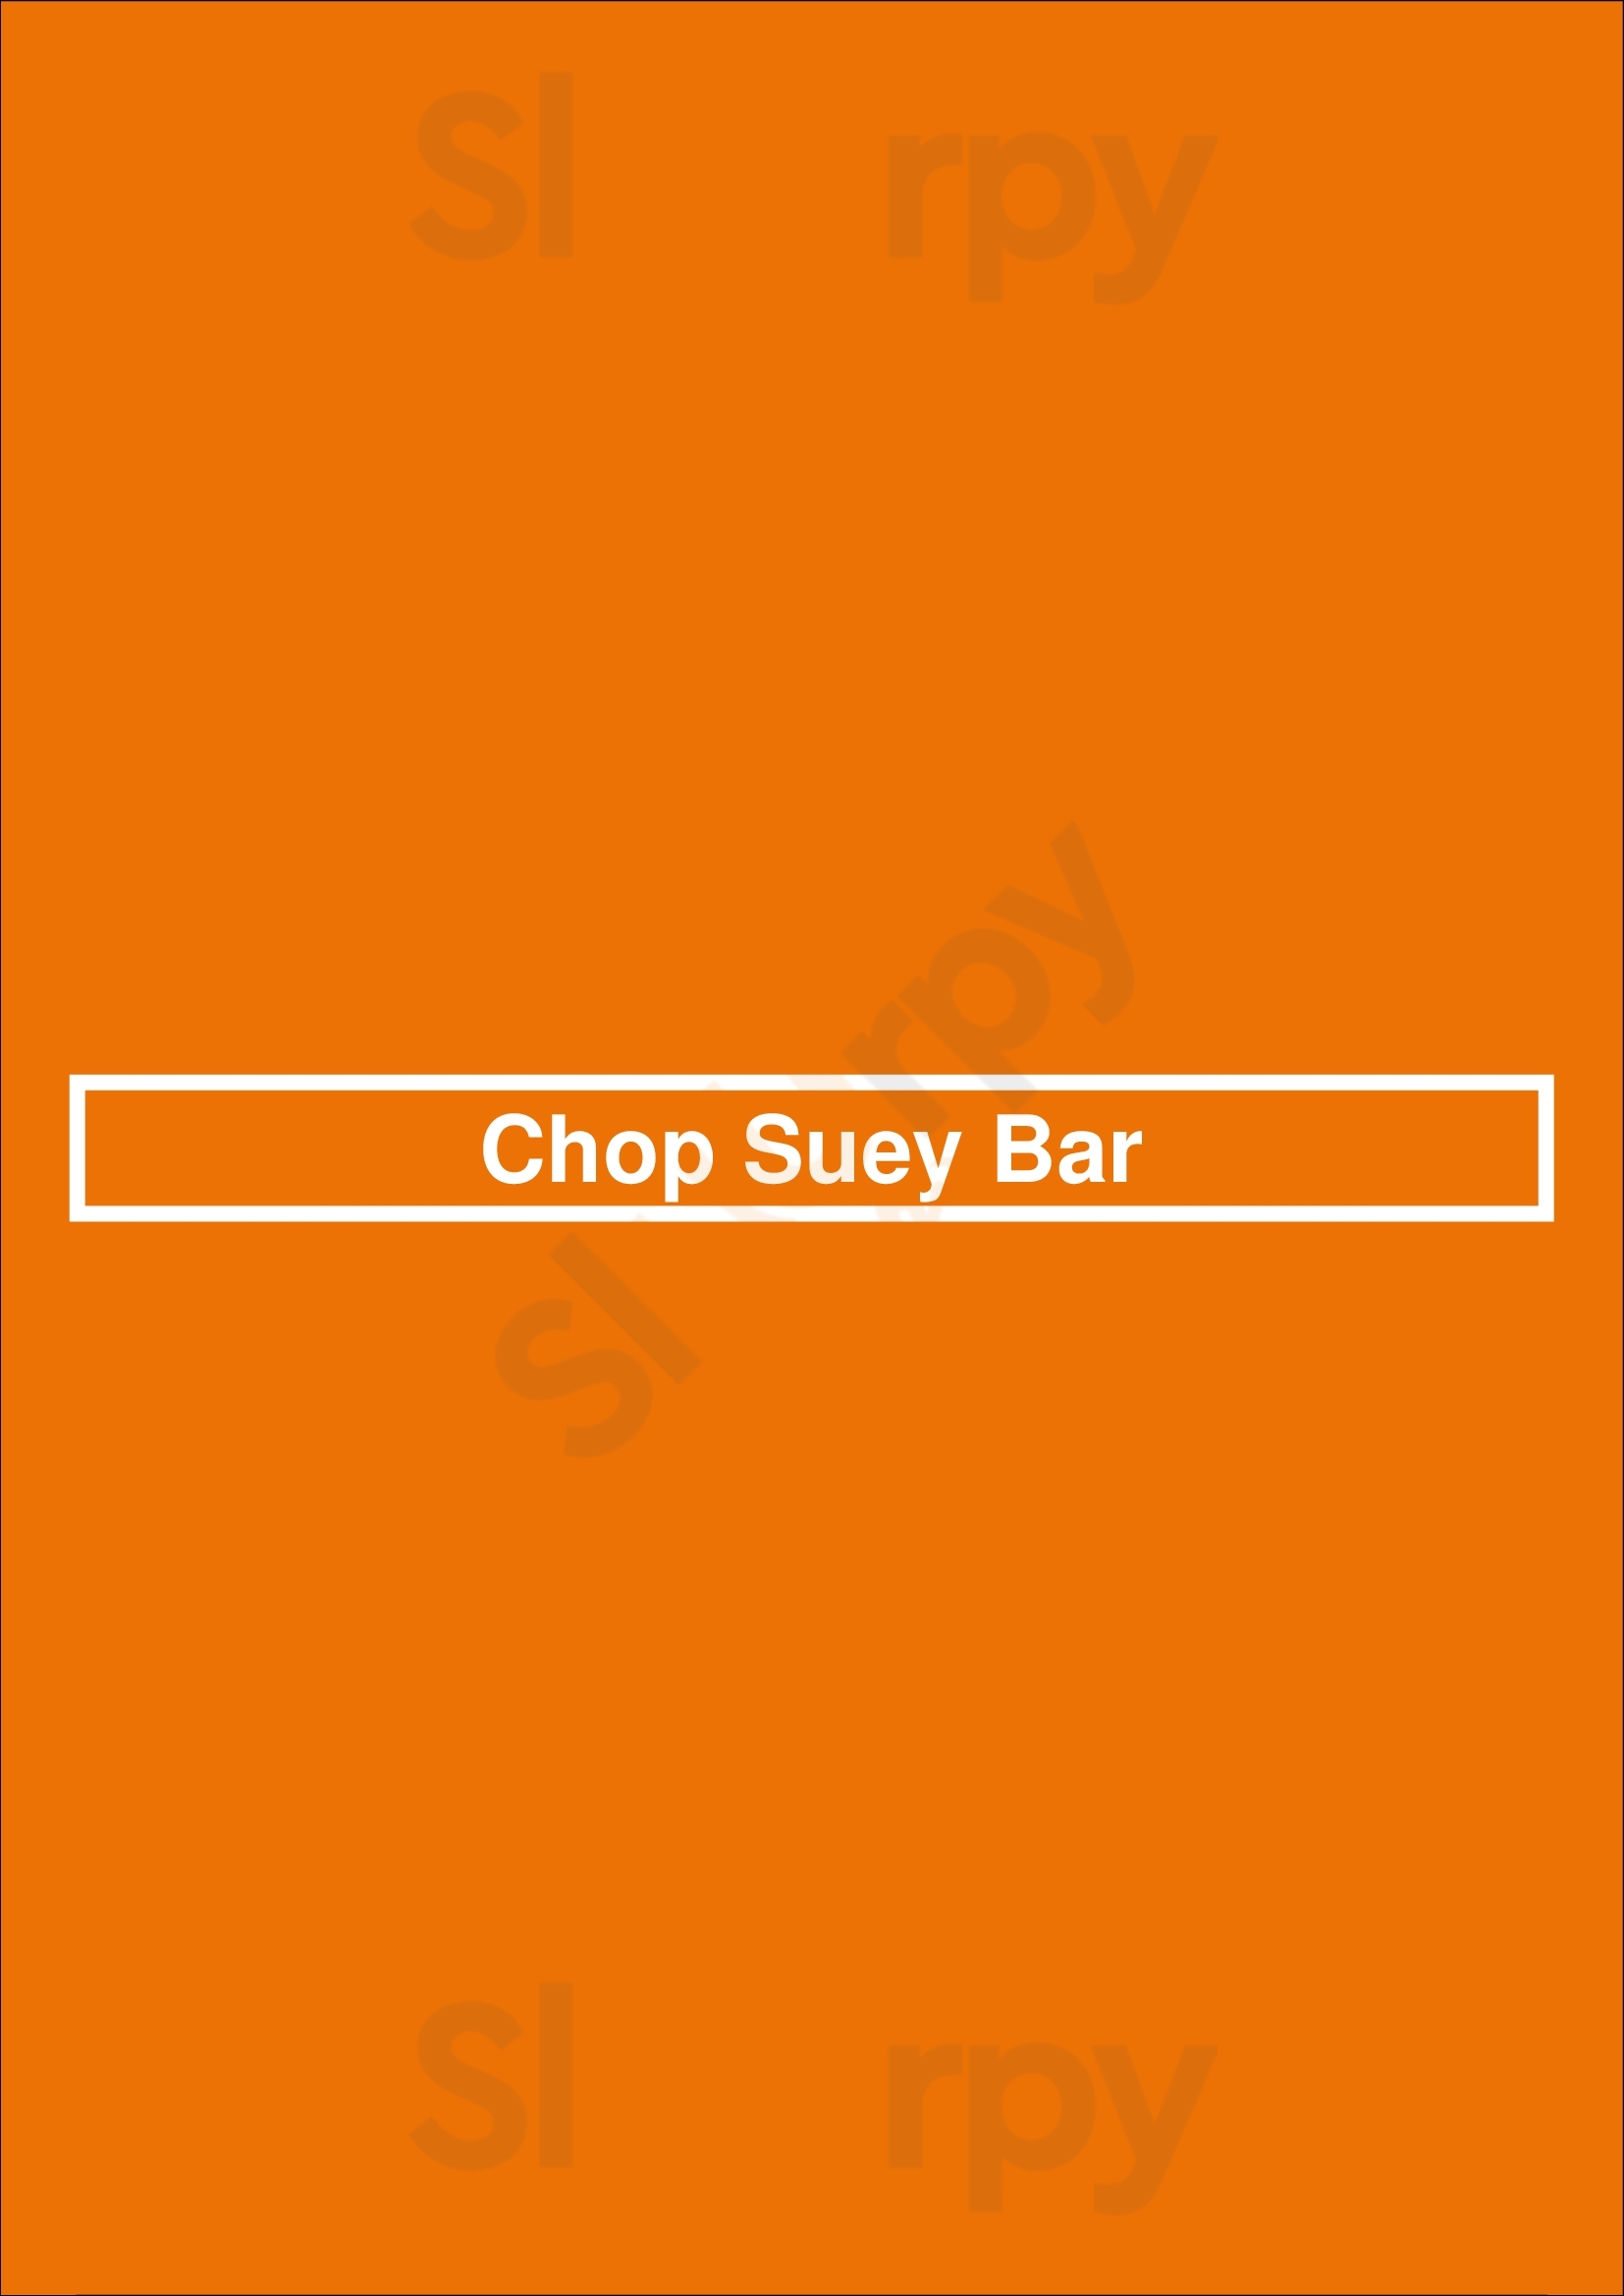 Chop Suey Bar Stoke-on-Trent Menu - 1